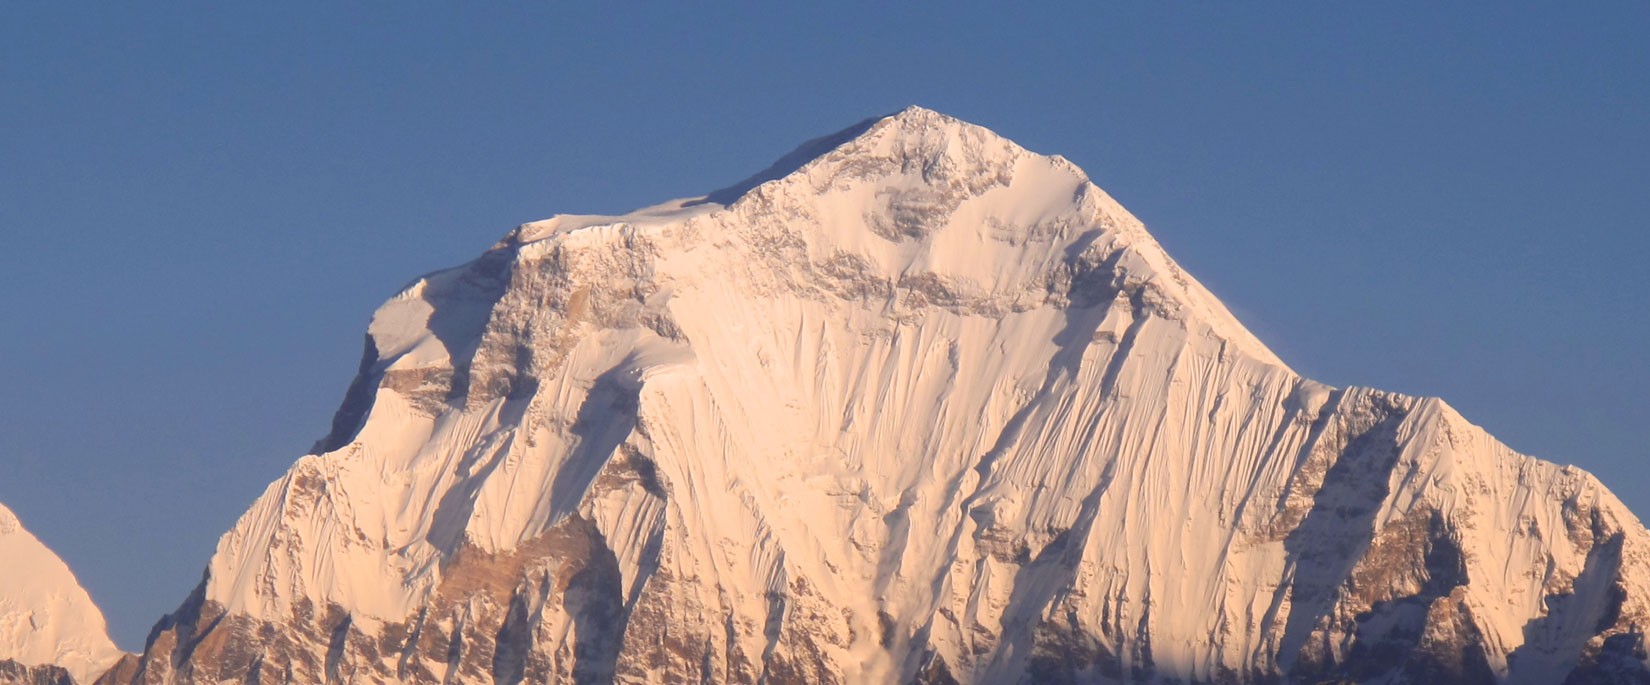  Dhaulagiri - 7th Highest Mountain in the World